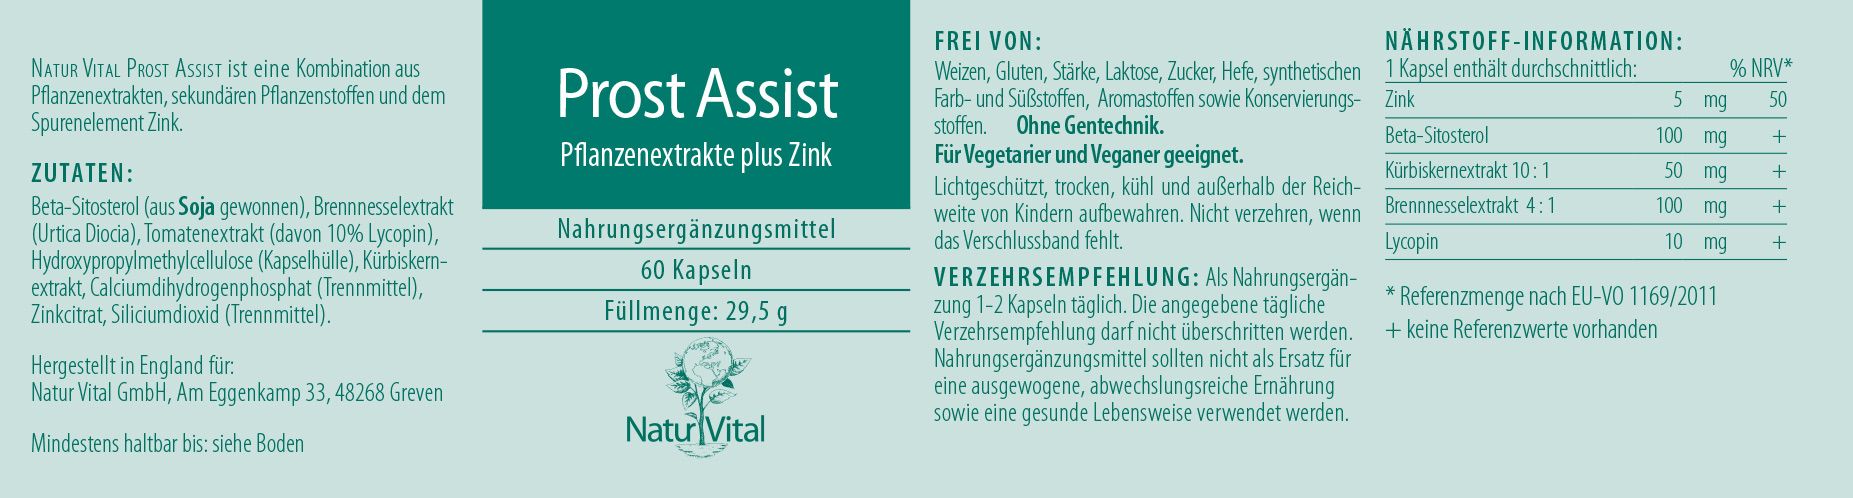 Prost Assist von Natur Vital Etikett